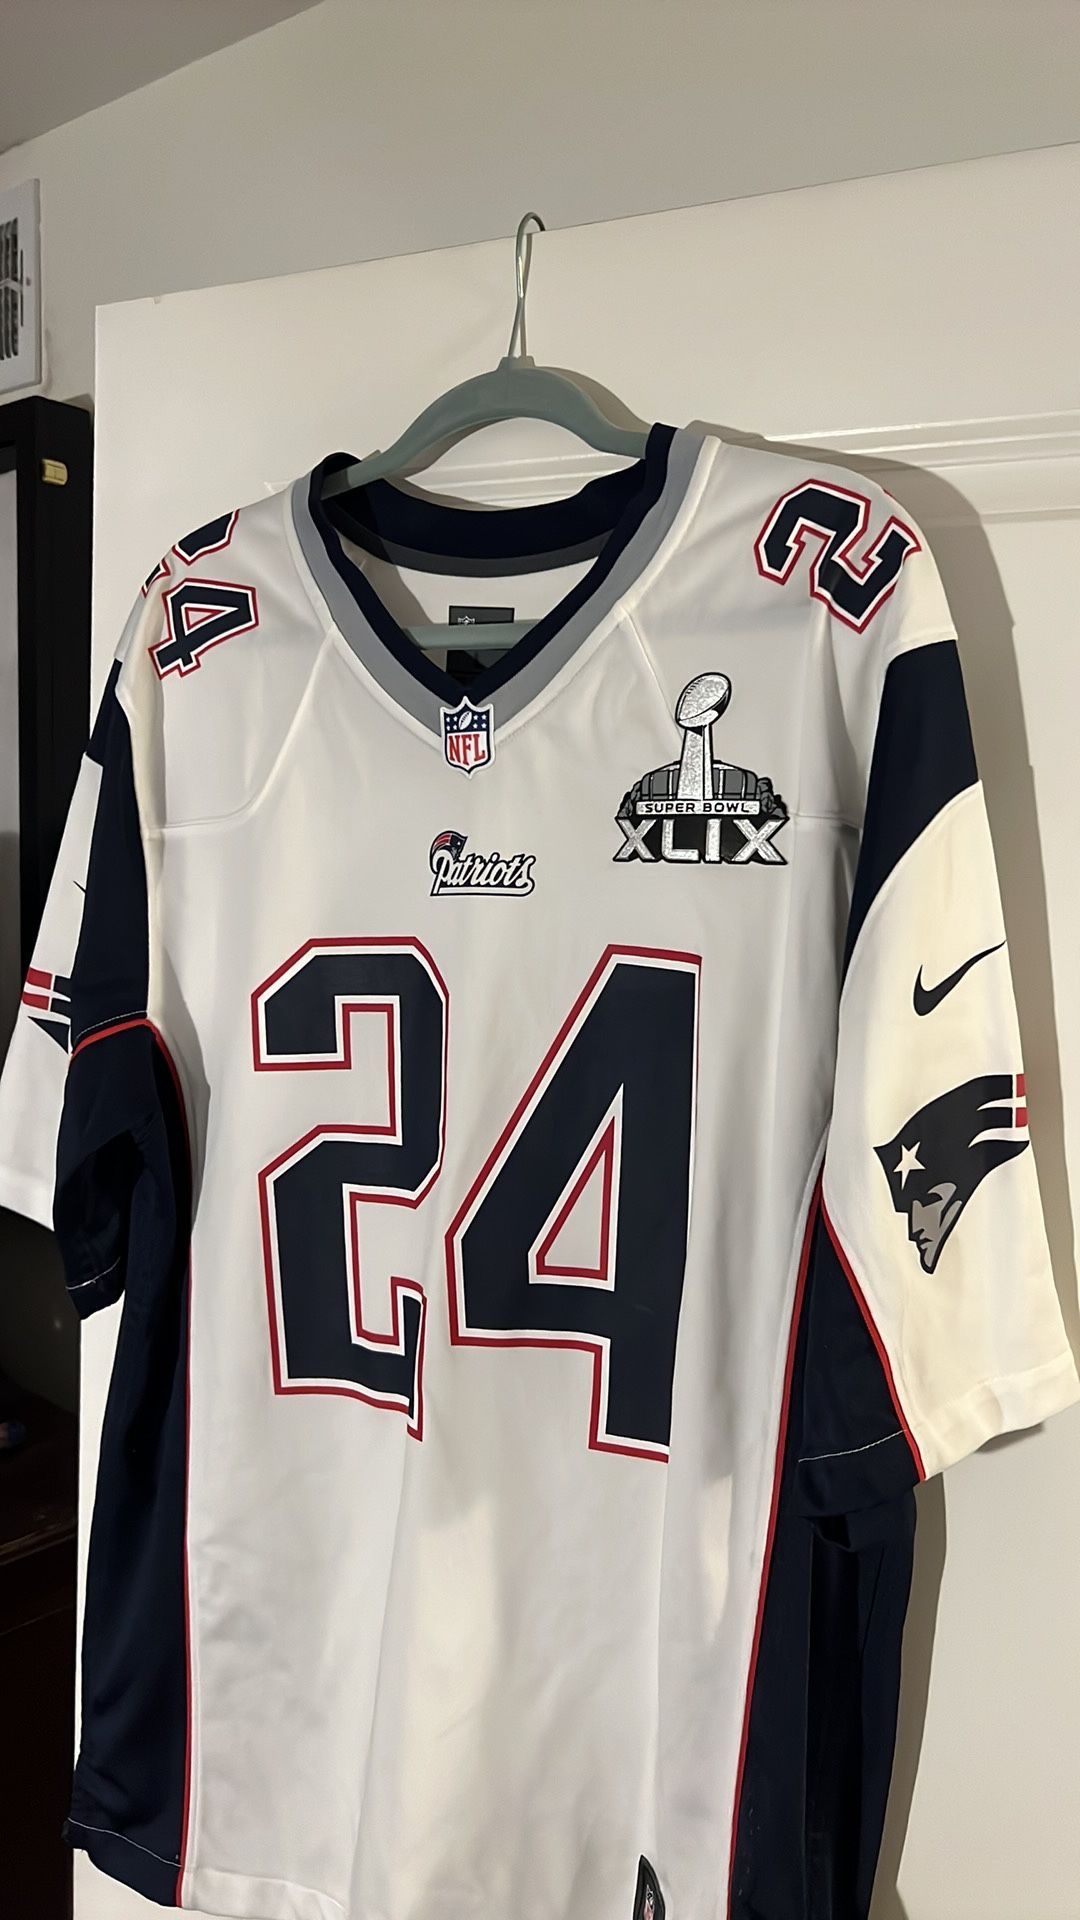 Nike Authentic New England Patriots Darrelle Revis Jersey. Size L Super bowl 49 edition, 